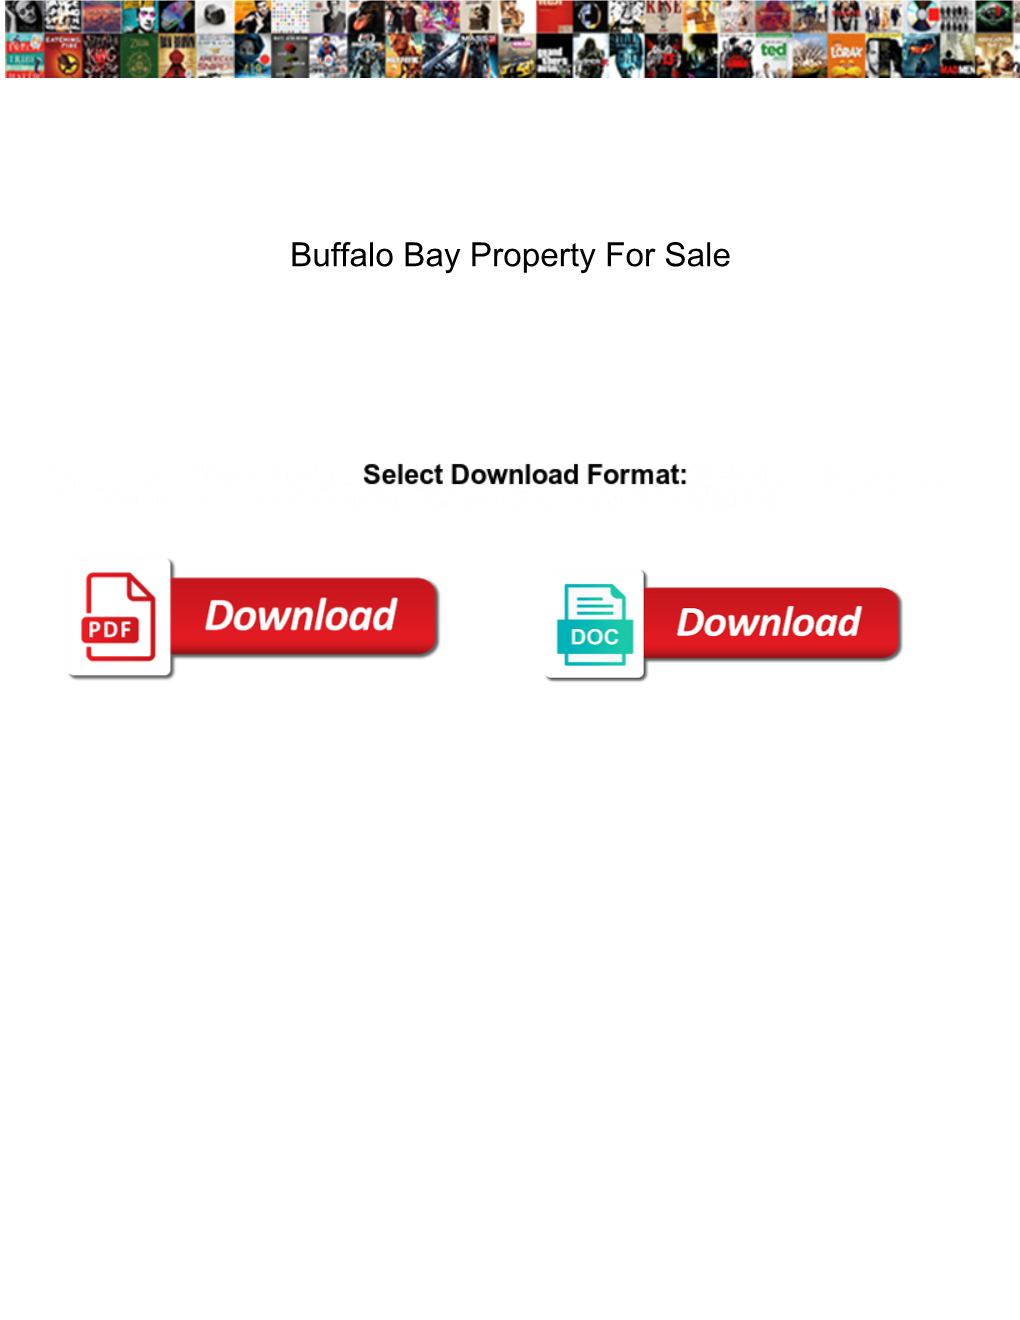 Buffalo Bay Property for Sale